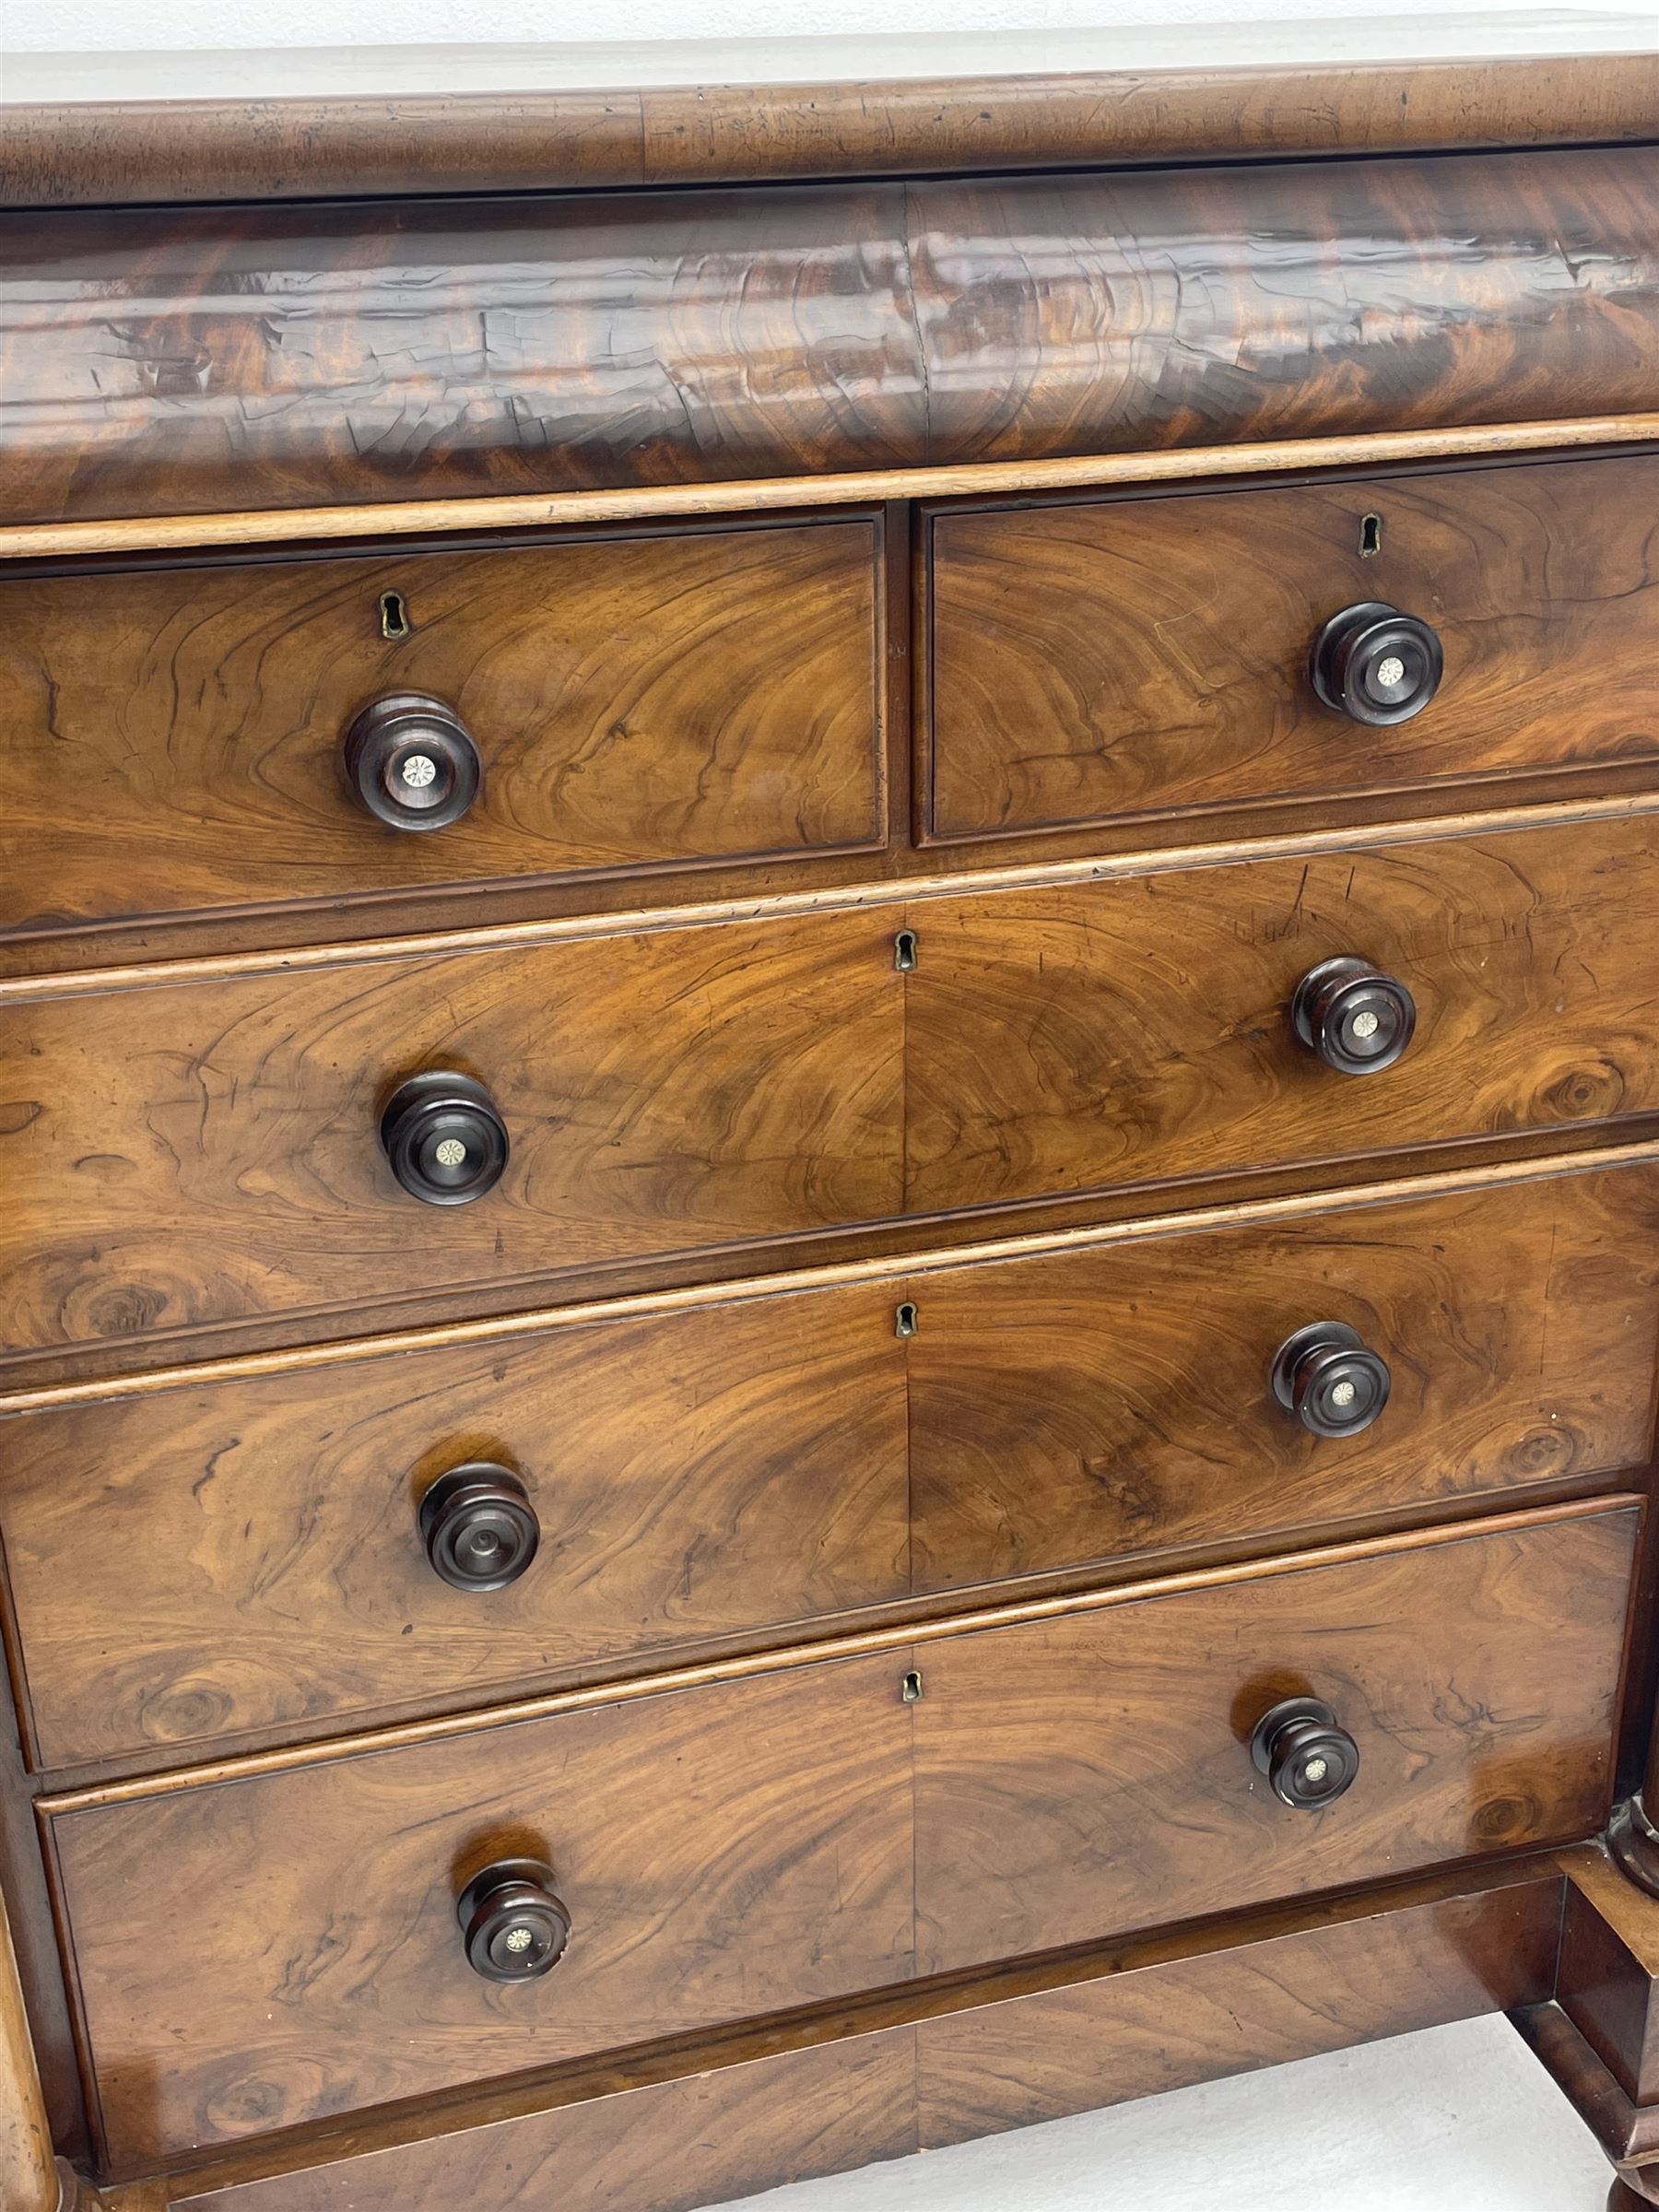 Victorian mahogany chest - Image 2 of 5